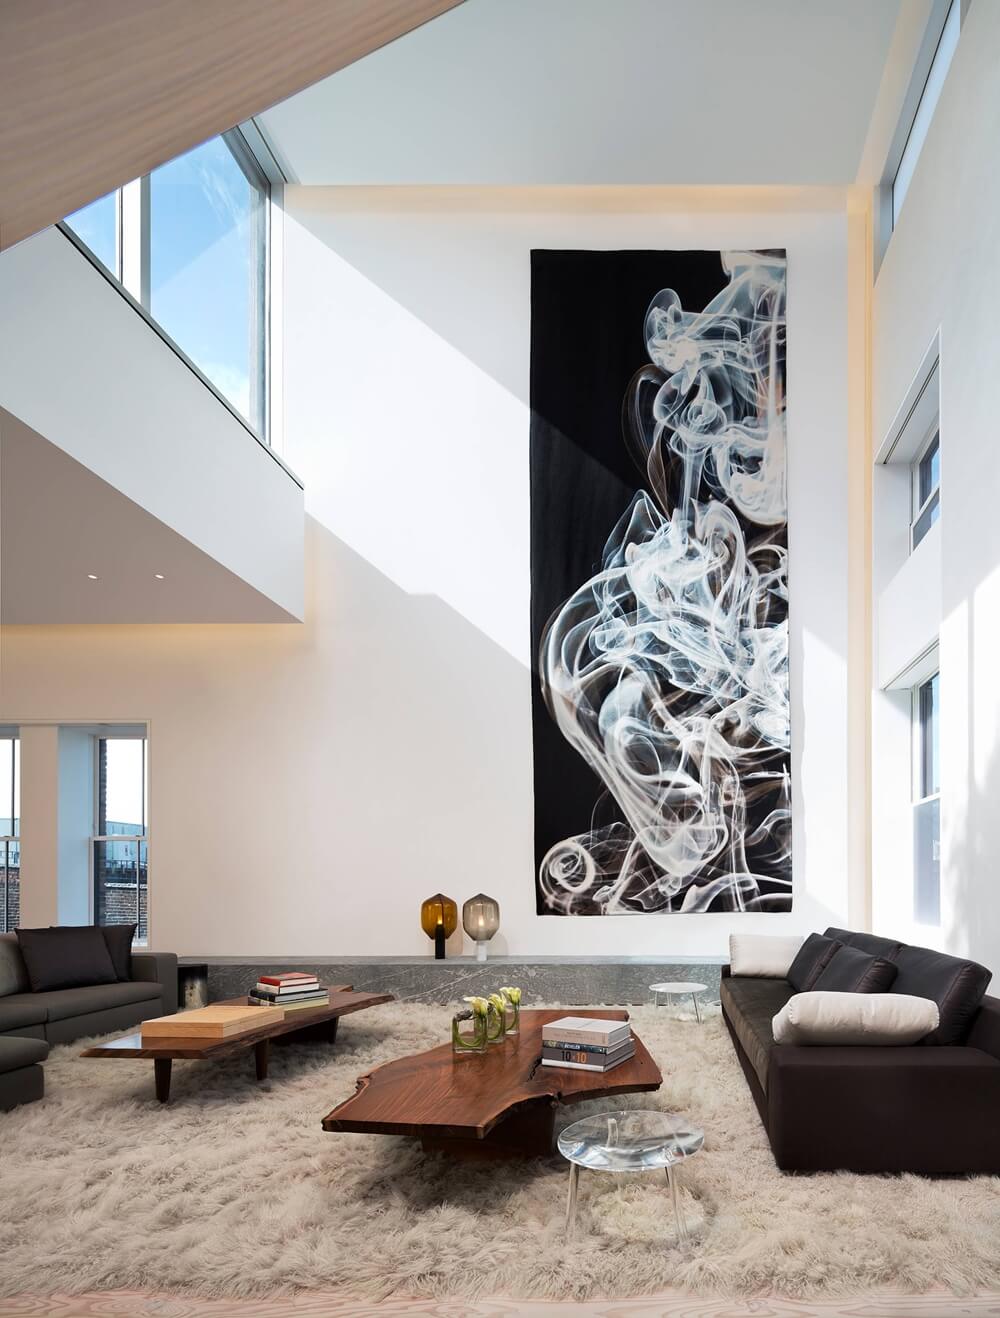 13 Tall Living Room Wall Decor Ideas